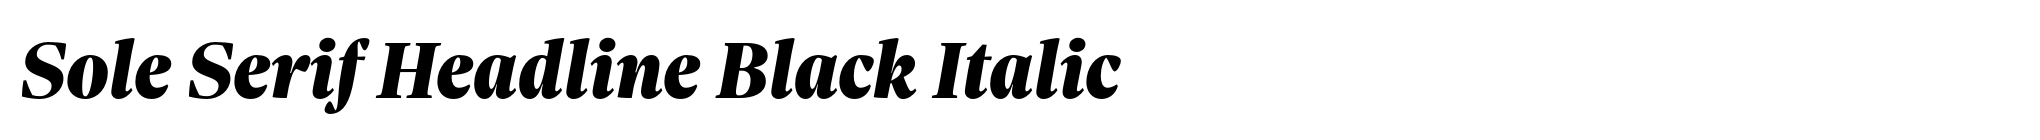 Sole Serif Headline Black Italic image